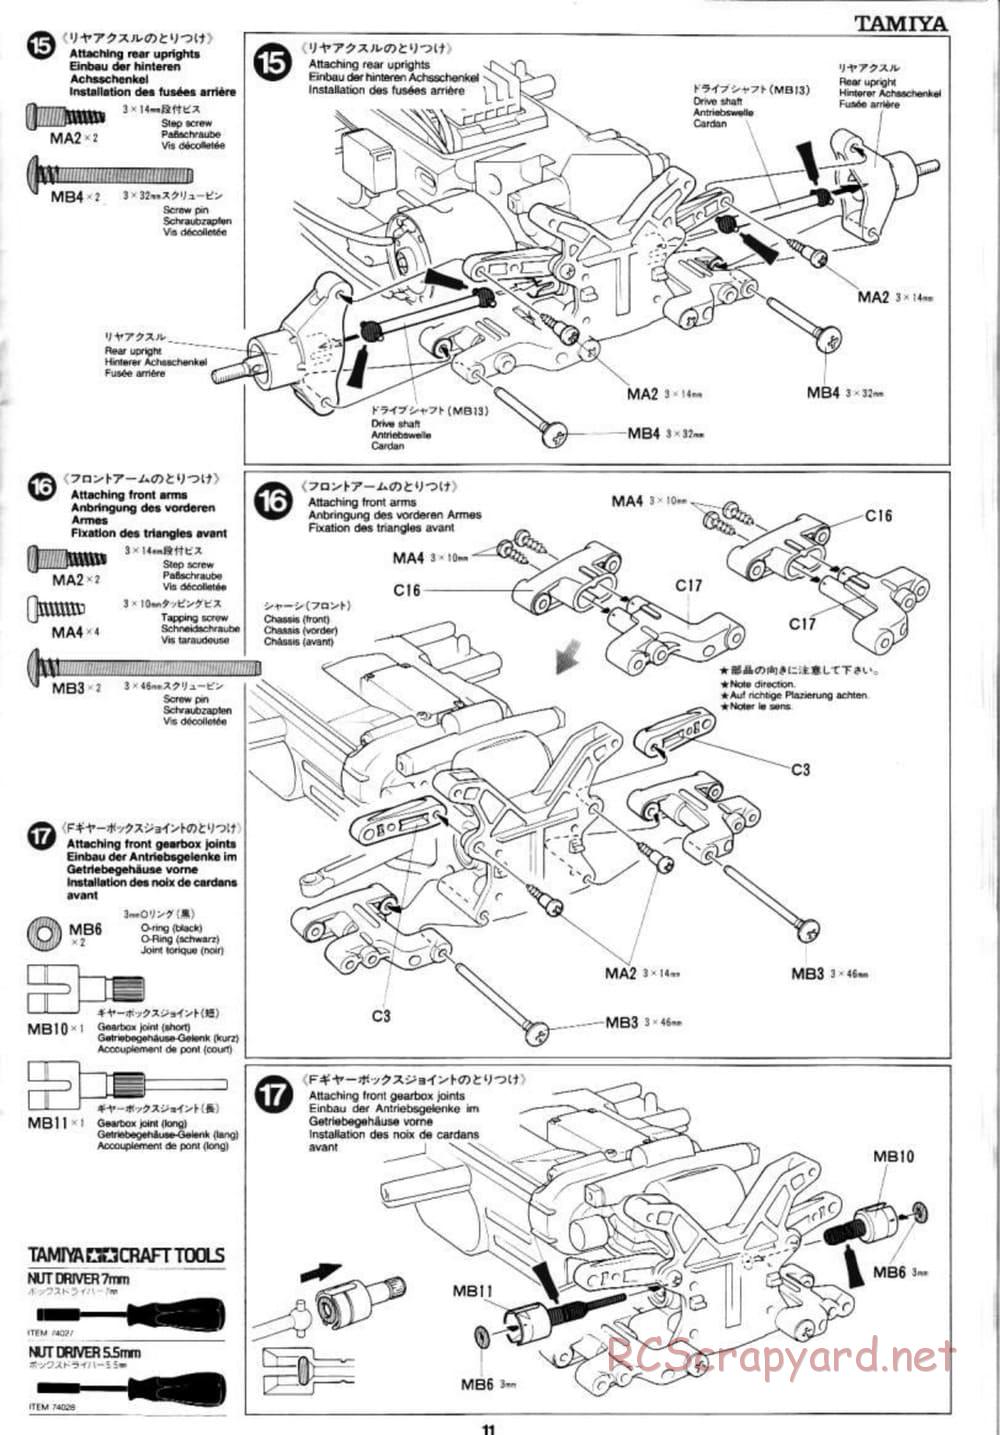 Tamiya - Peugeot 406 ST - TL-01 Chassis - Manual - Page 11